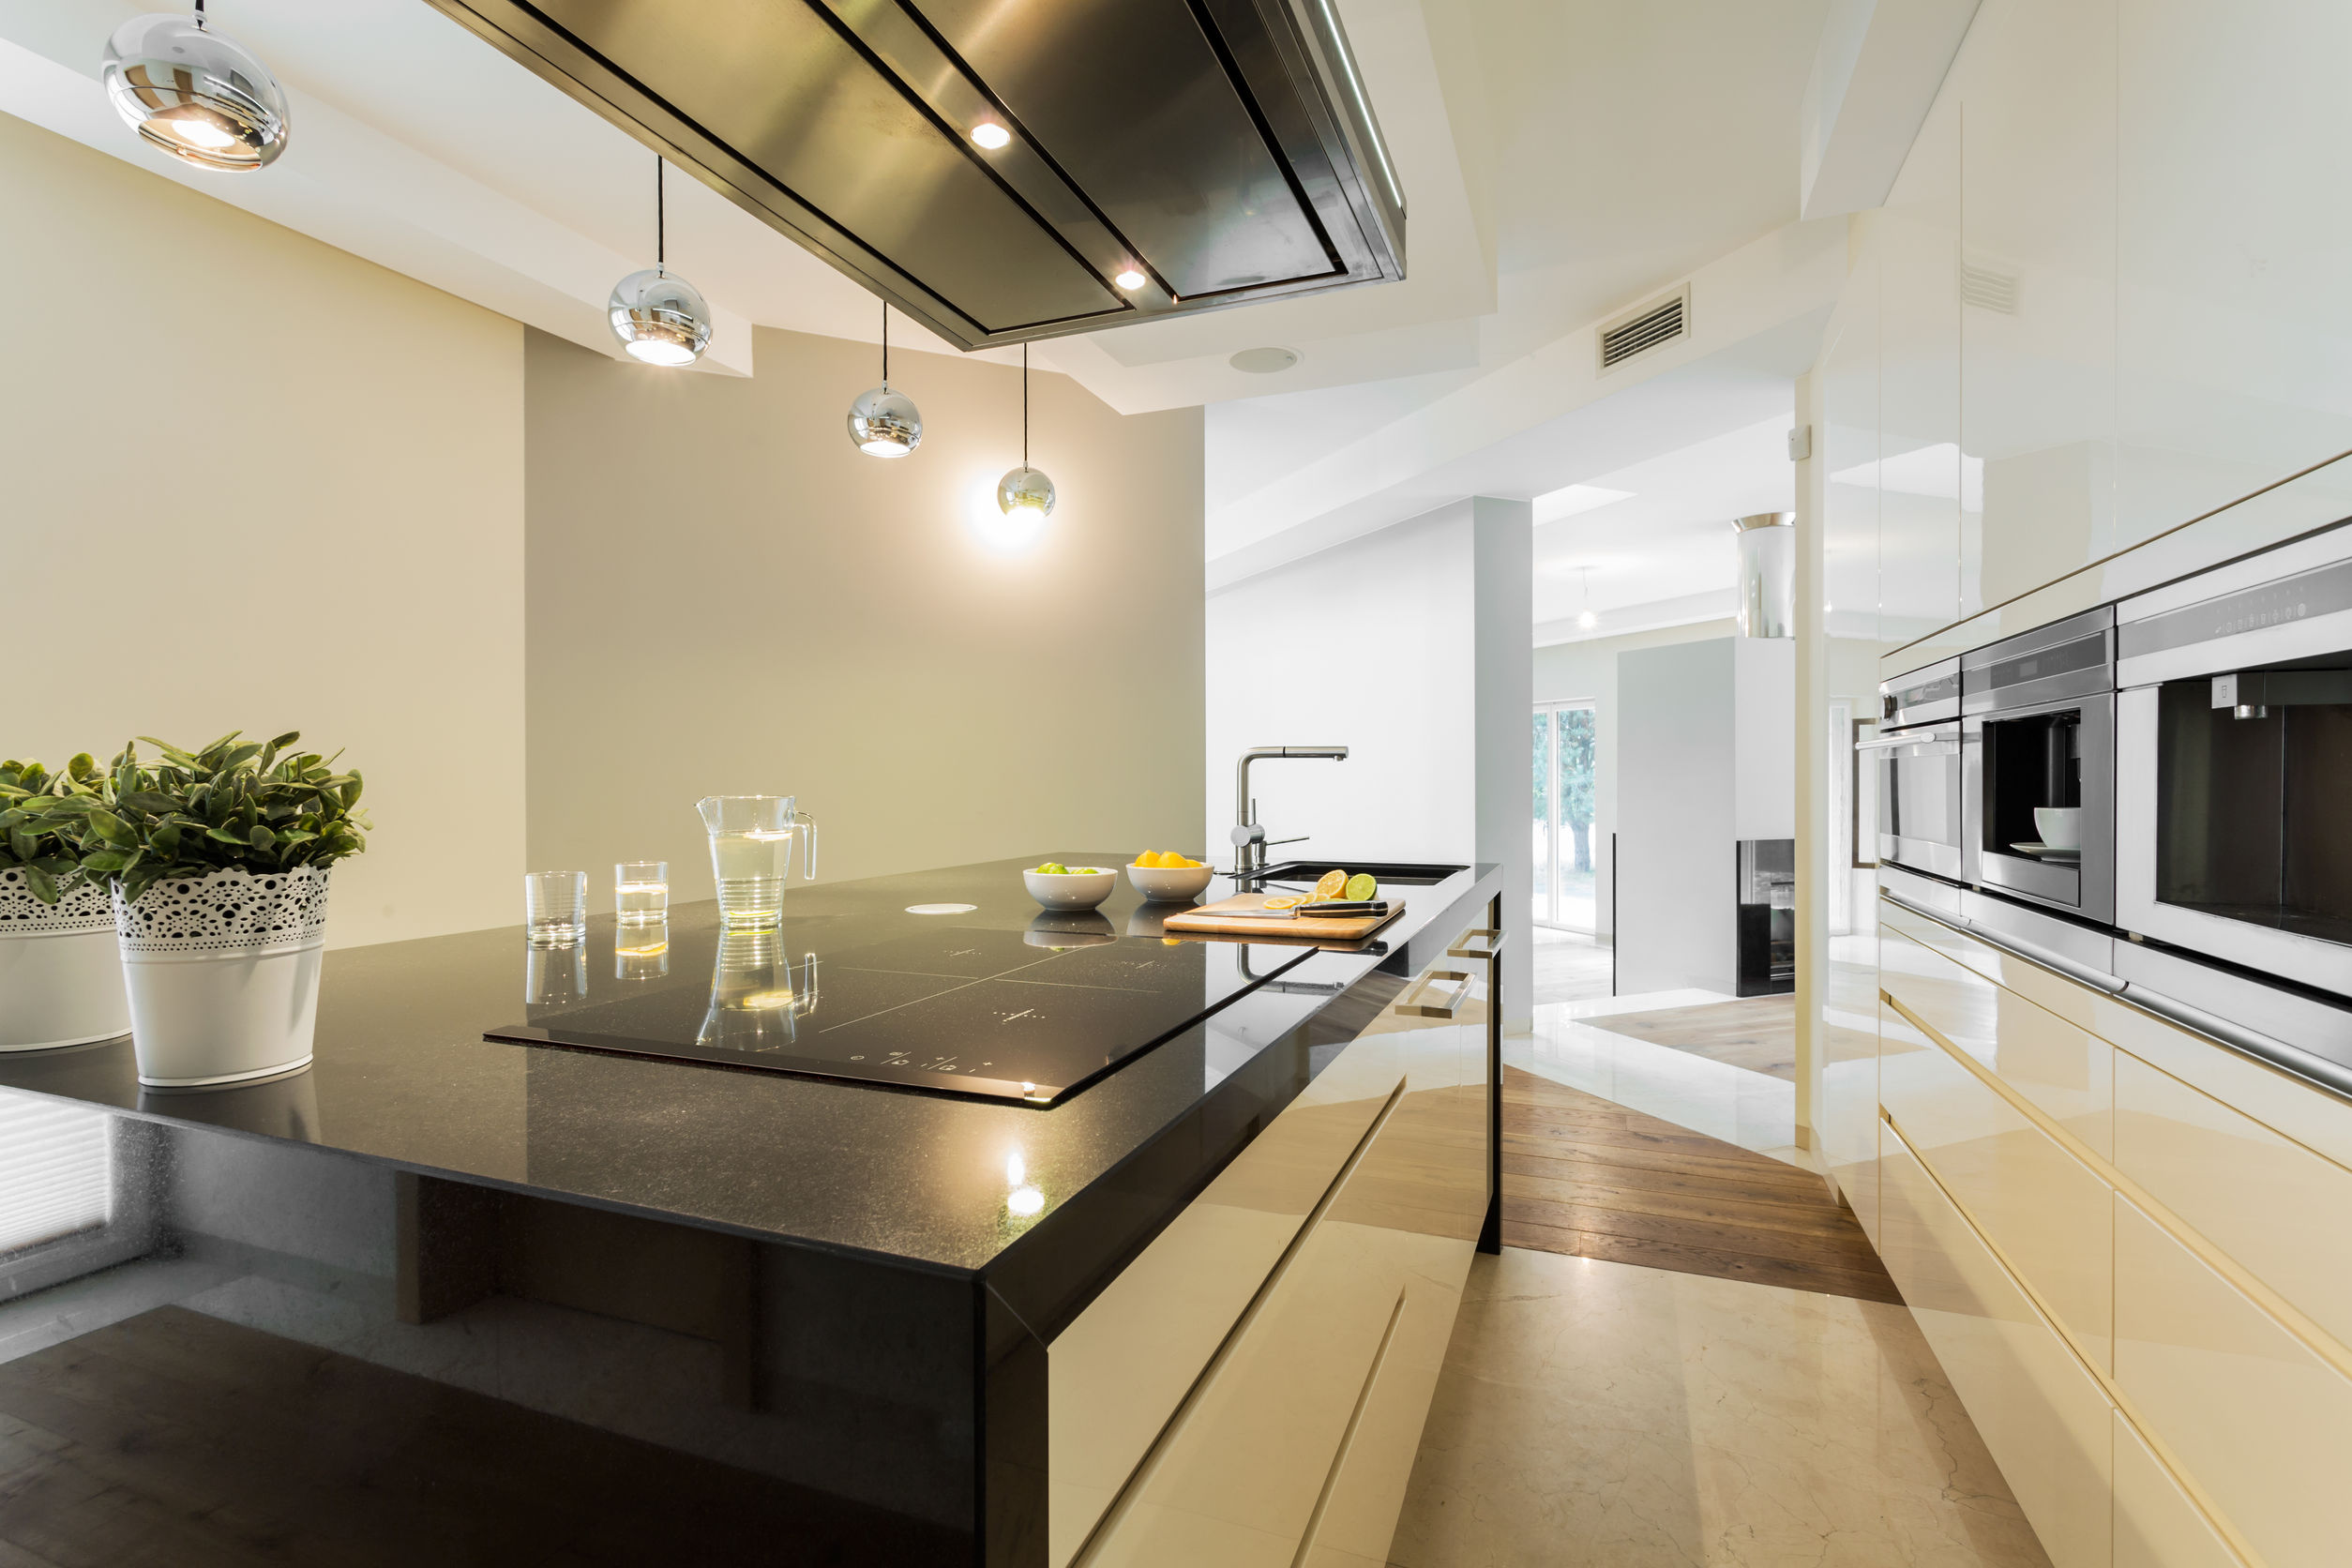 34396591 - horizontal view of countertops in designer kitchen